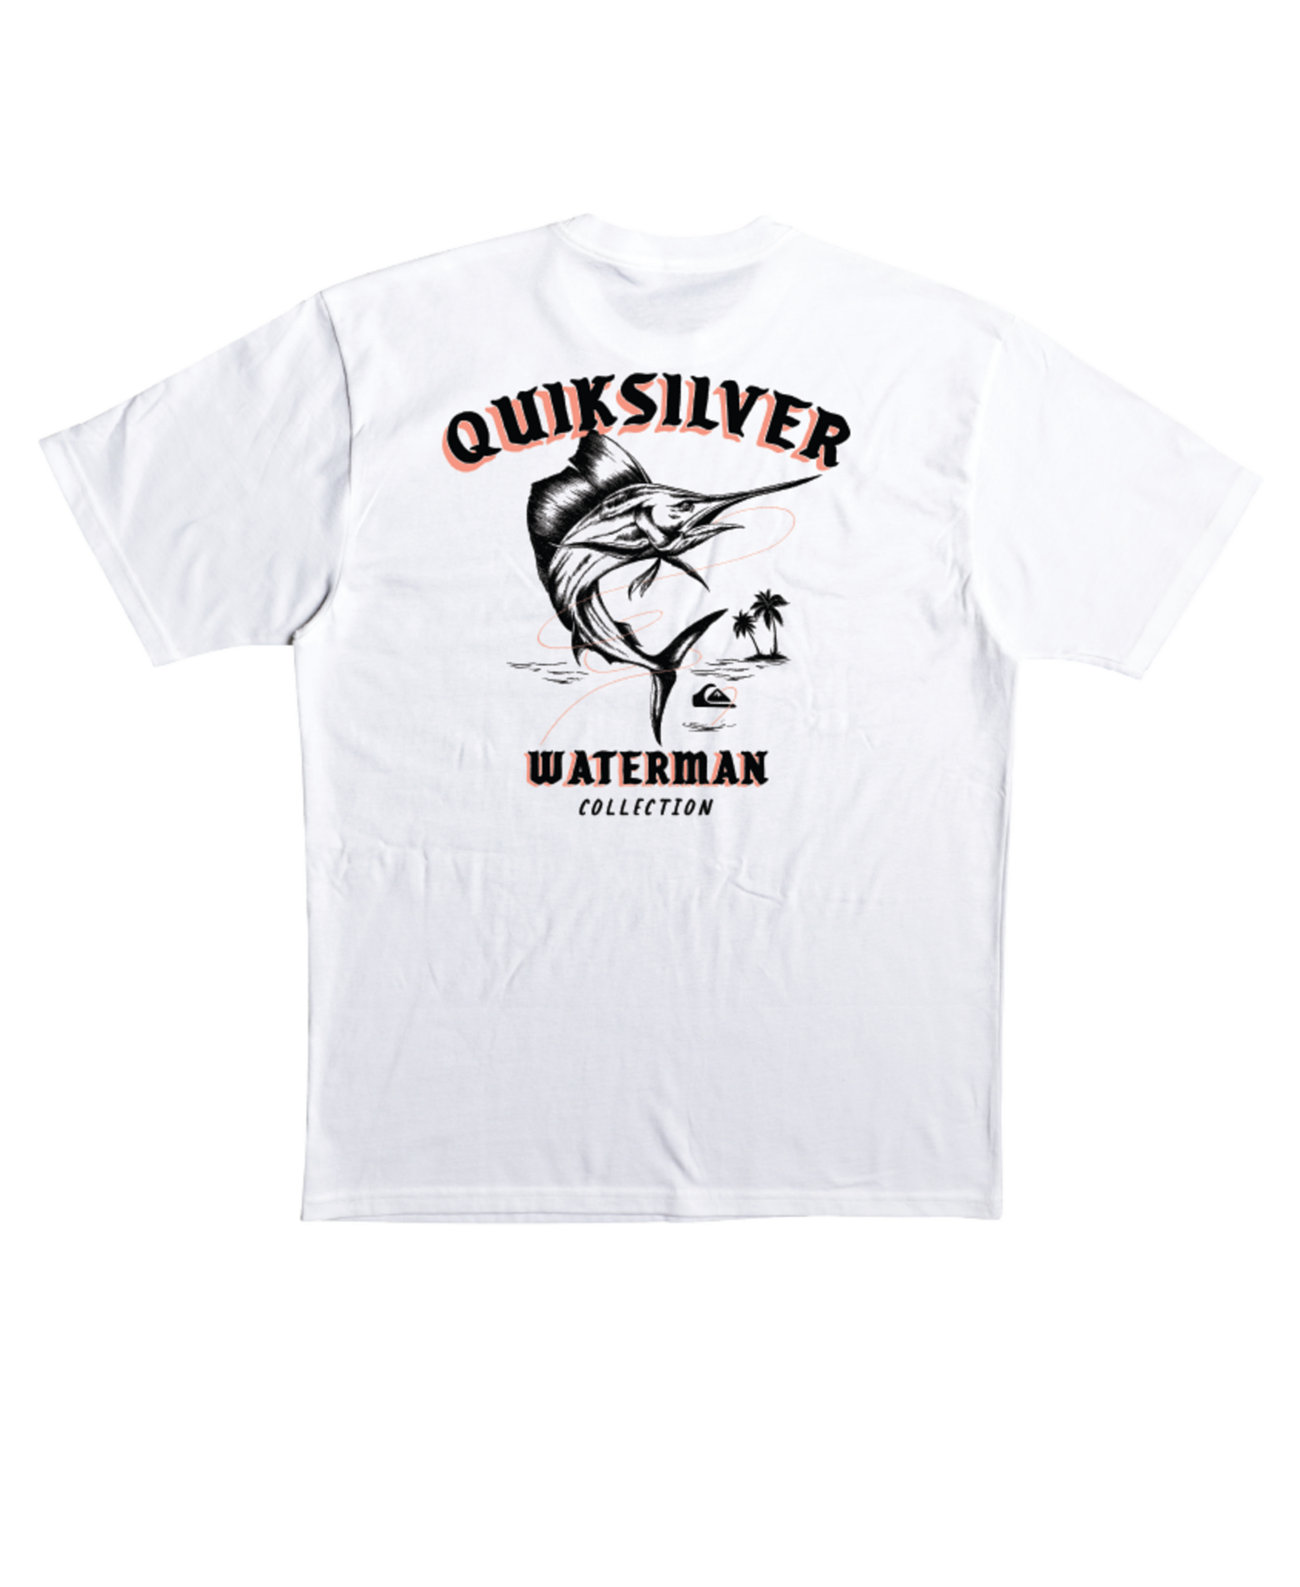 Мужская футболка Quiksilver с короткими рукавами и рыбками Quiksilver Waterman